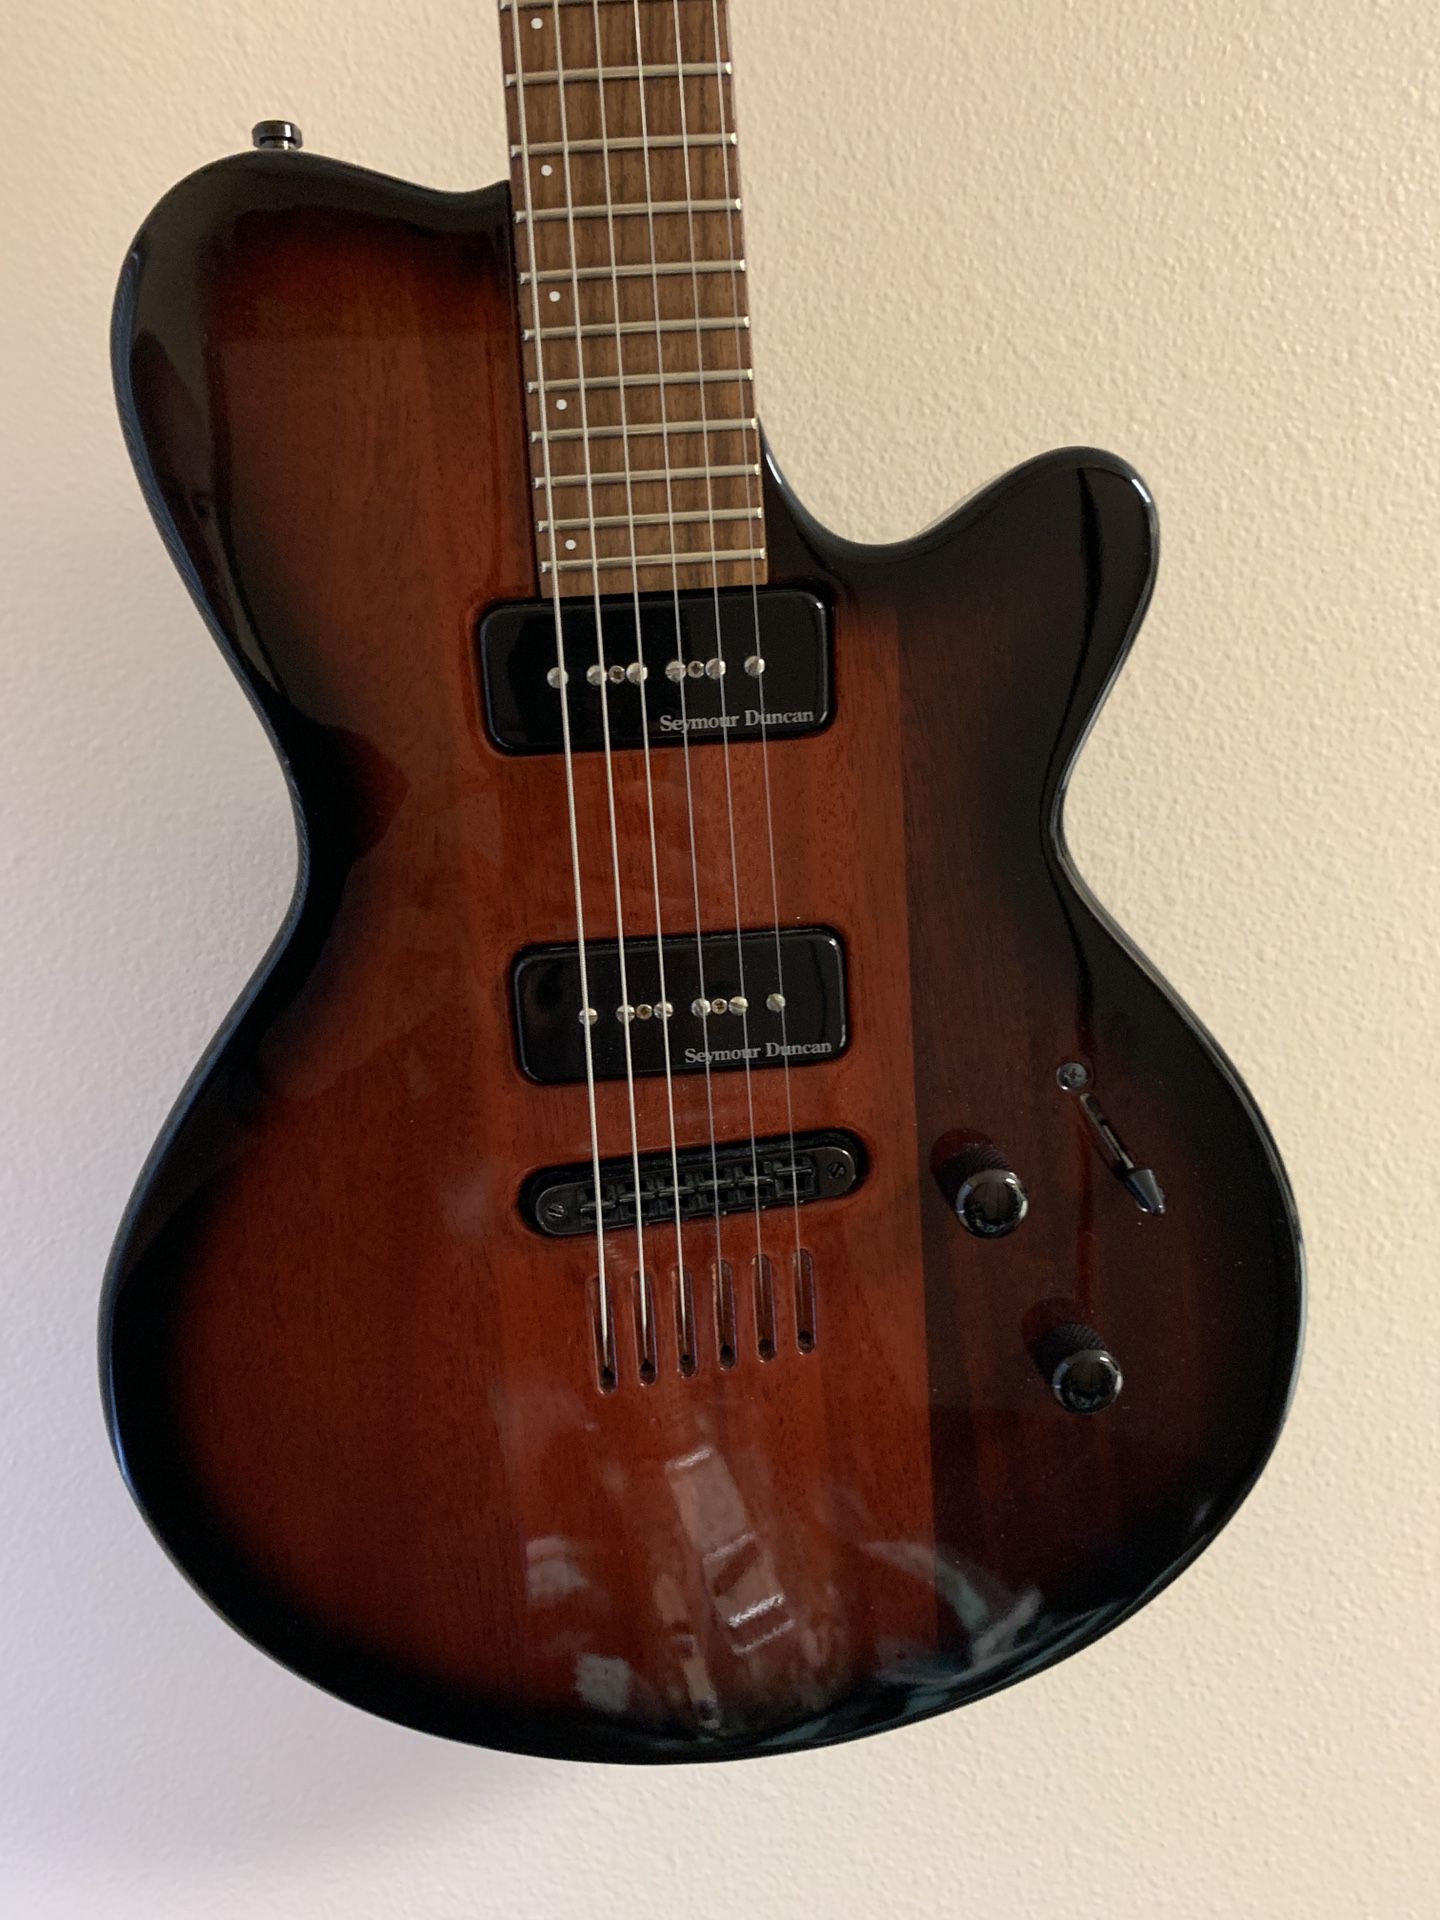 Godin LG electric guitar P90’s Seymour Duncan’s telecaster